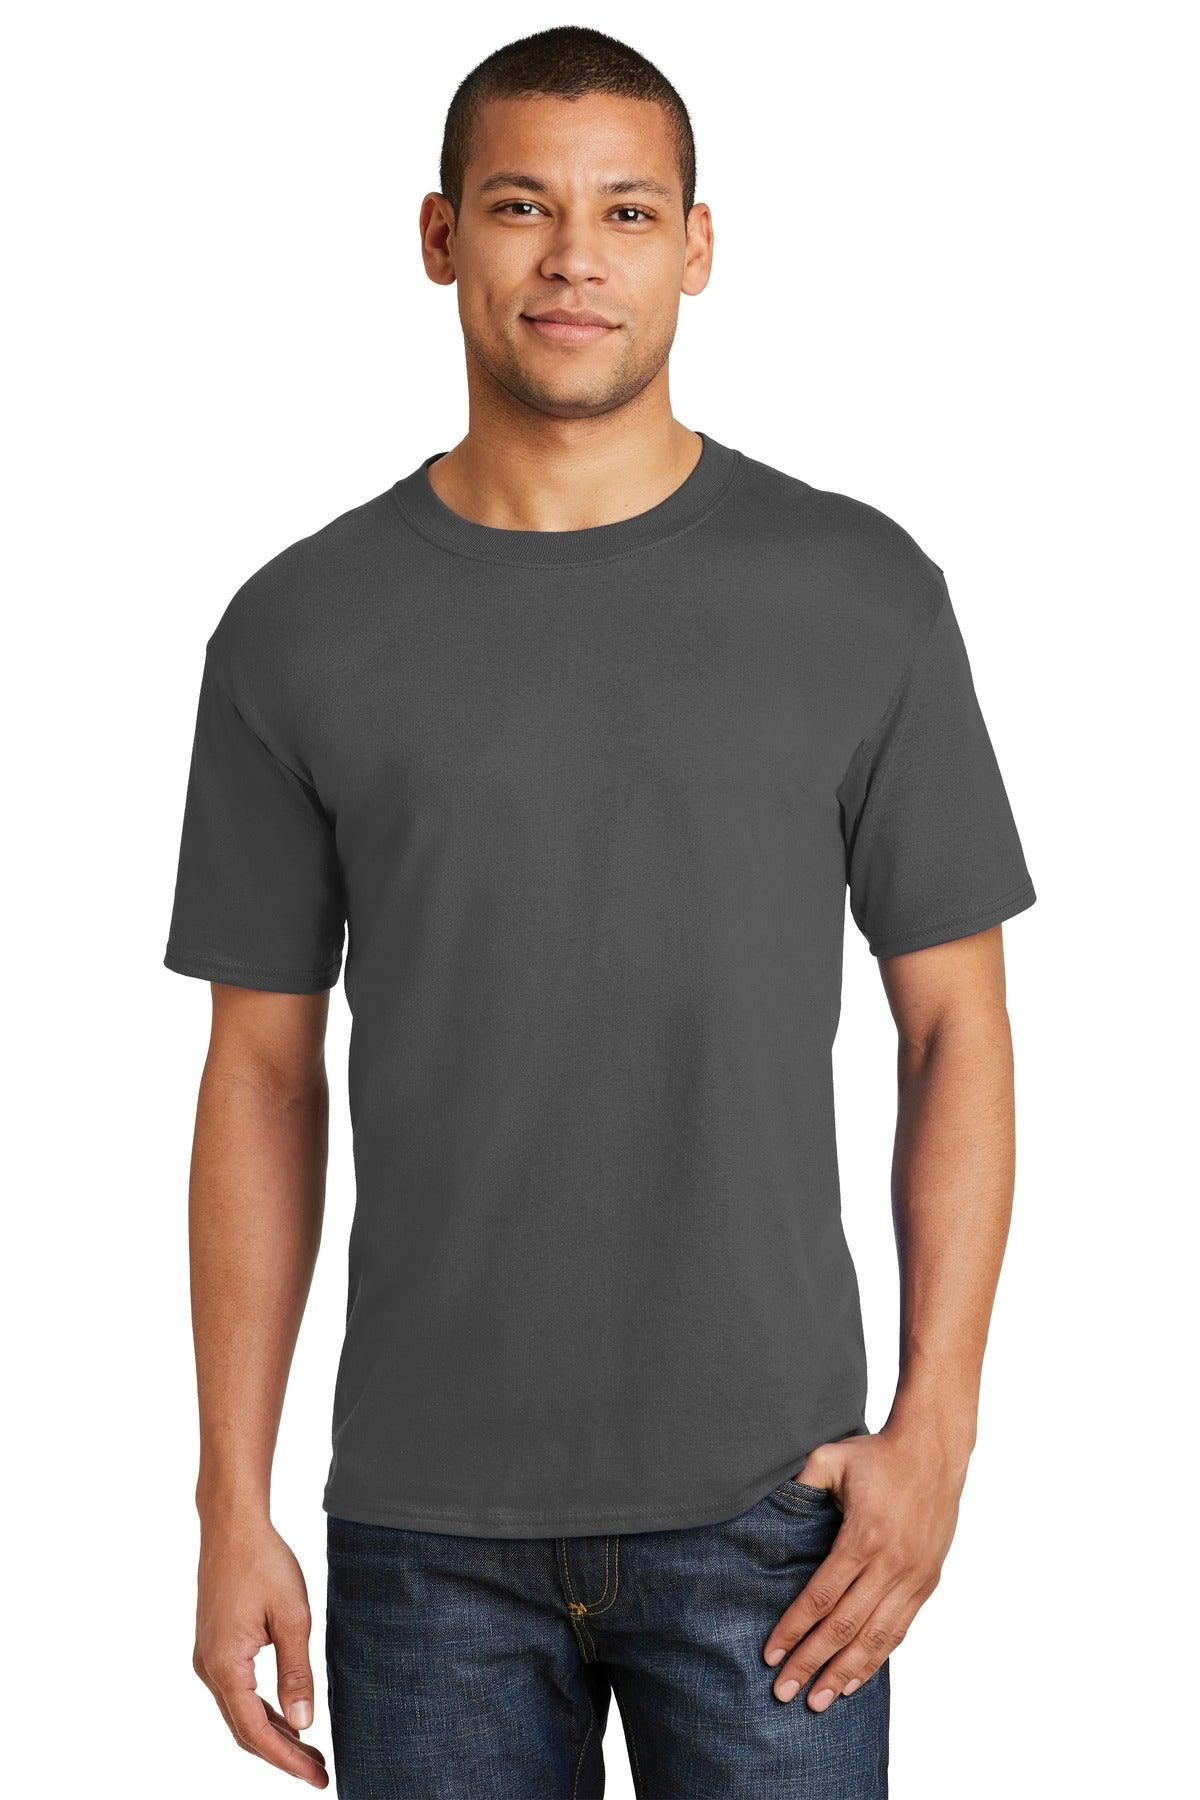 Hanes Beefy-T - 100% Cotton T-Shirt. 5180 - Dresses Max